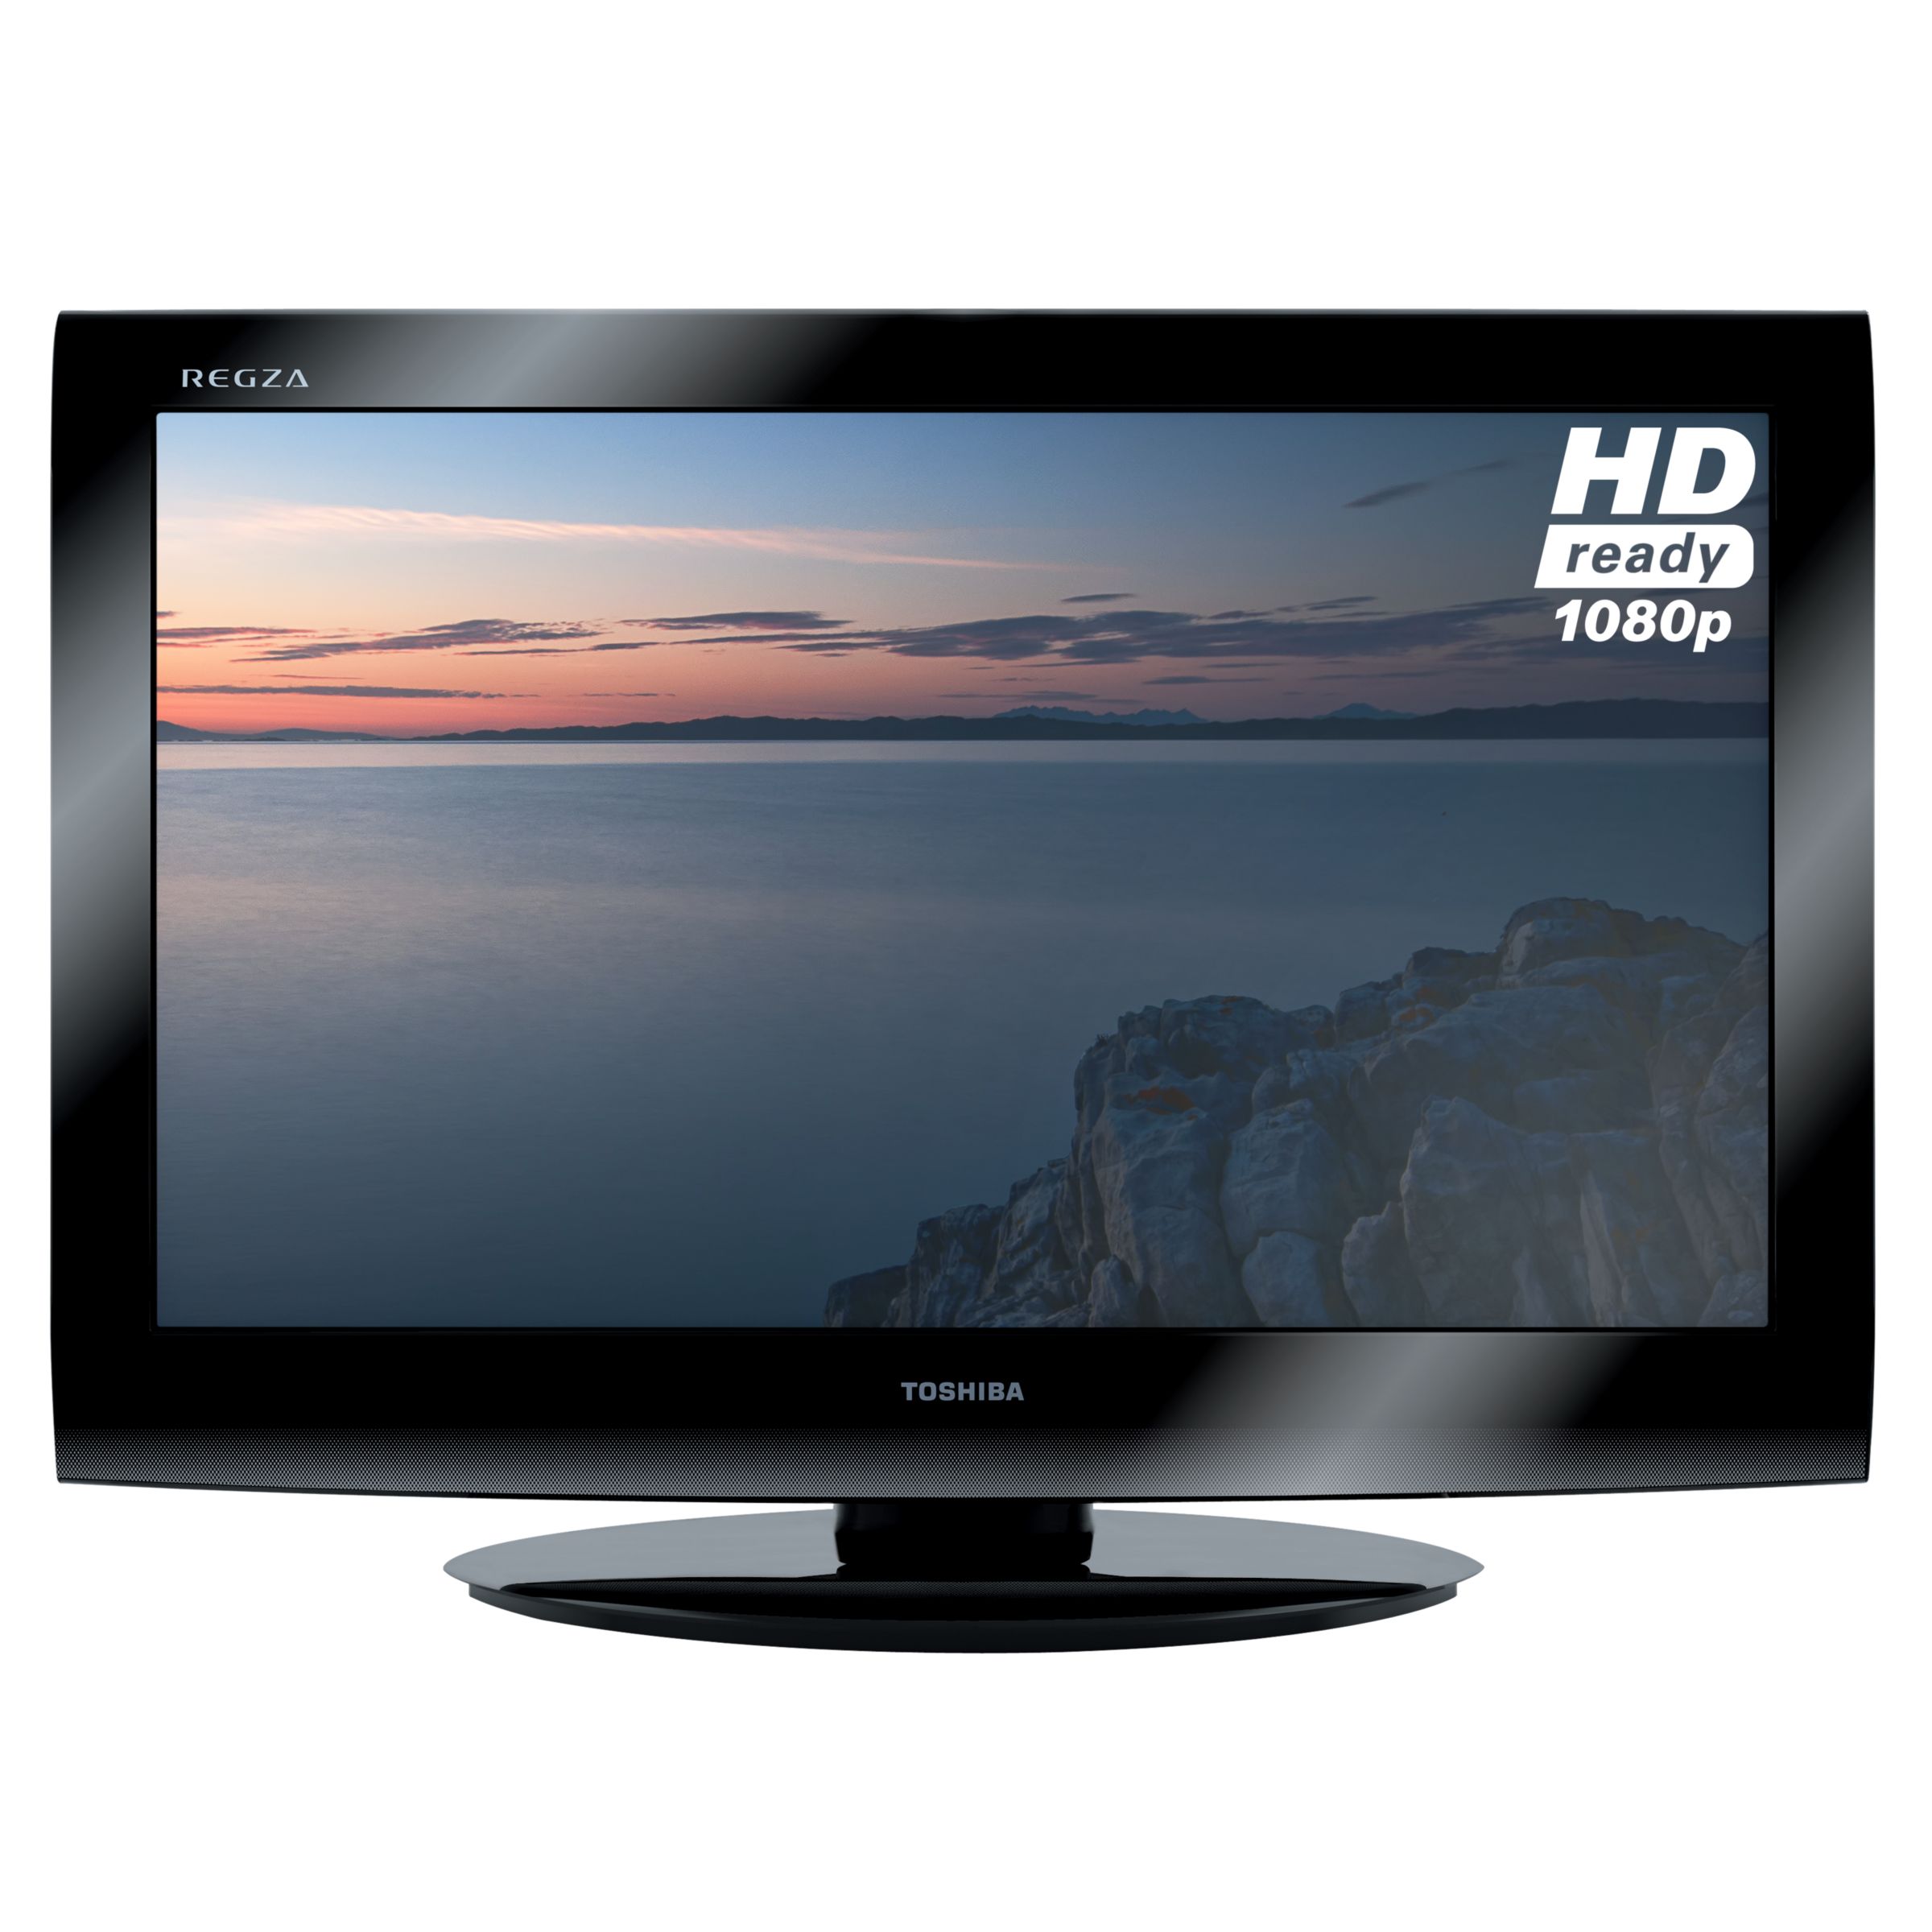 Toshiba Regza 46SL753 LED HD 1080p Digital Television, 46 Inch with FREE Blu-ray Player at John Lewis